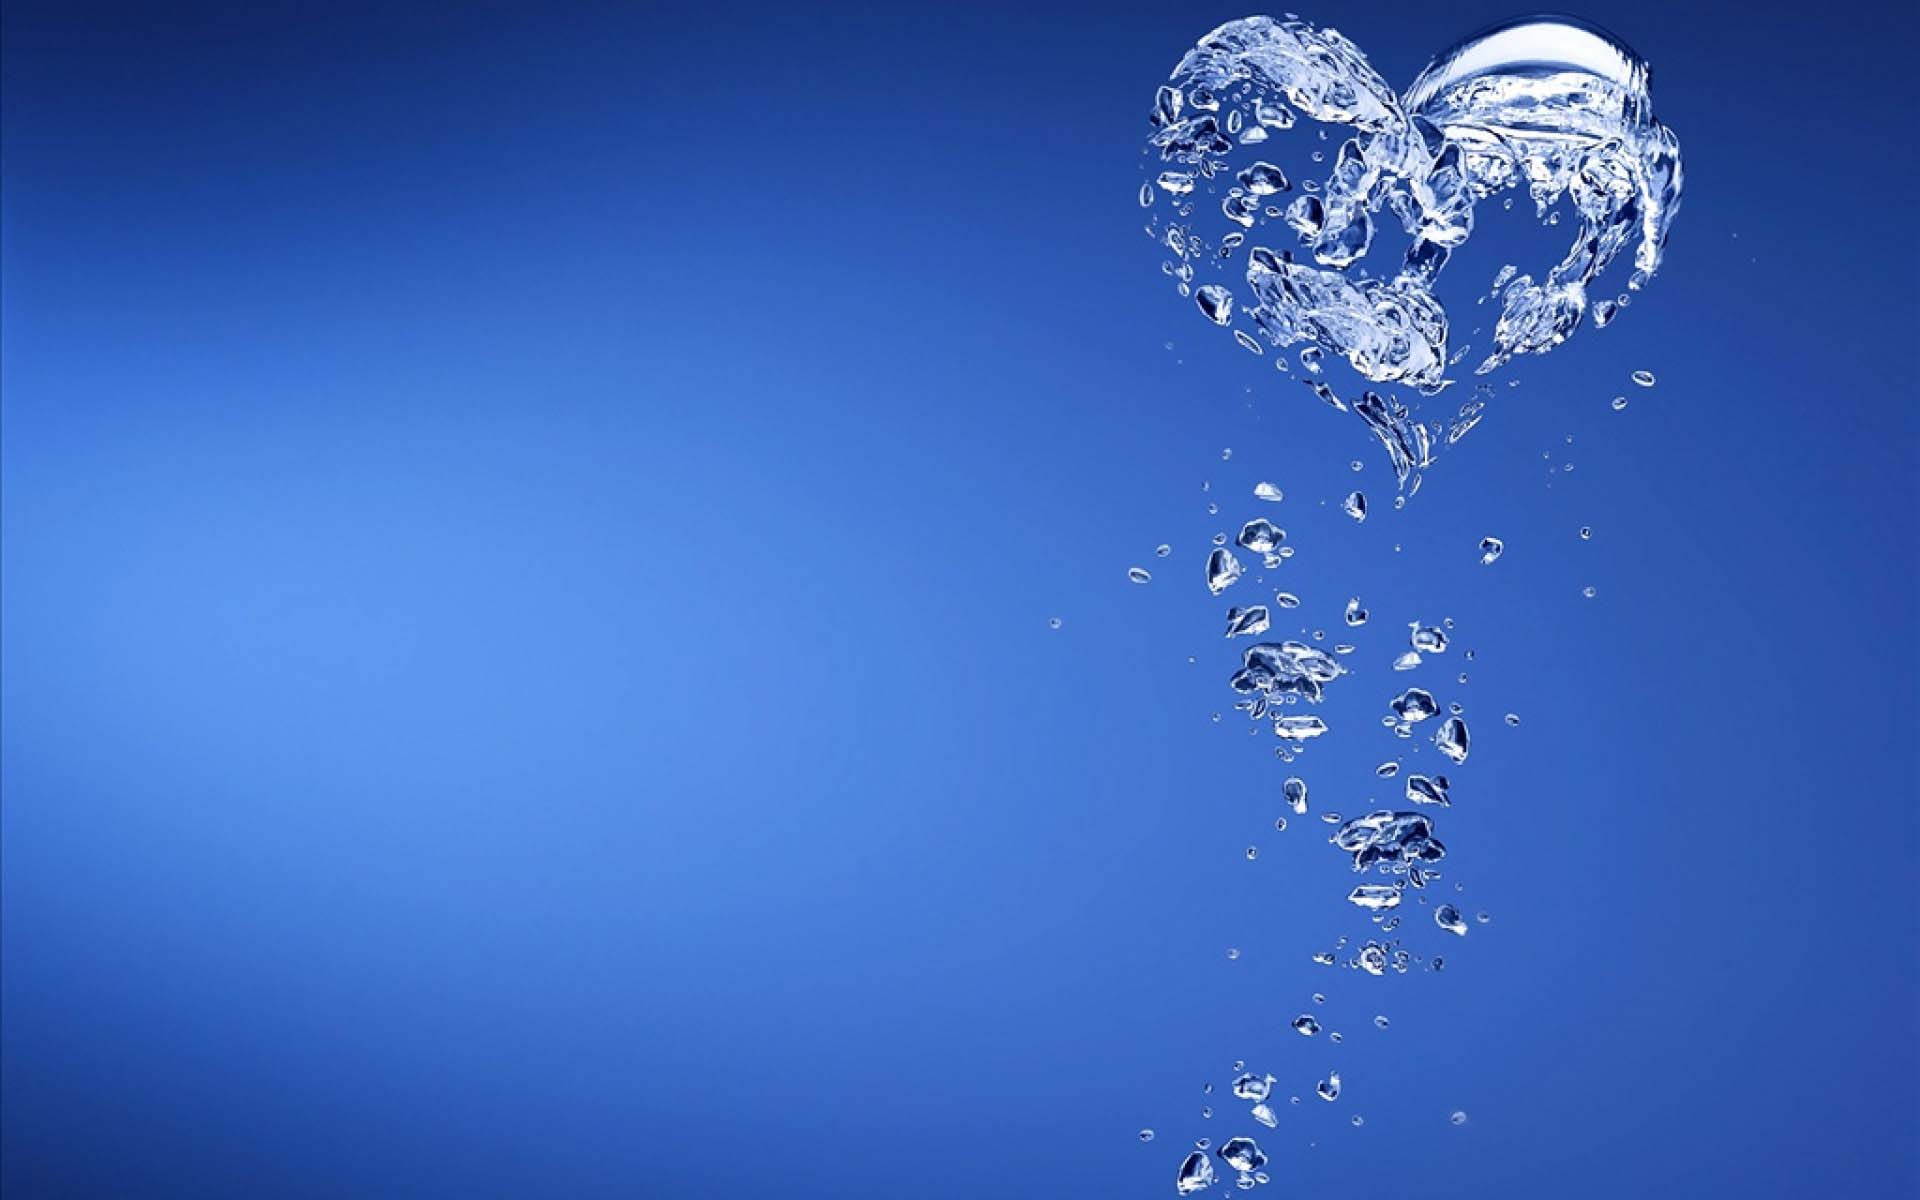 壁紙空気hidup,青い,水,空,心臓,液体